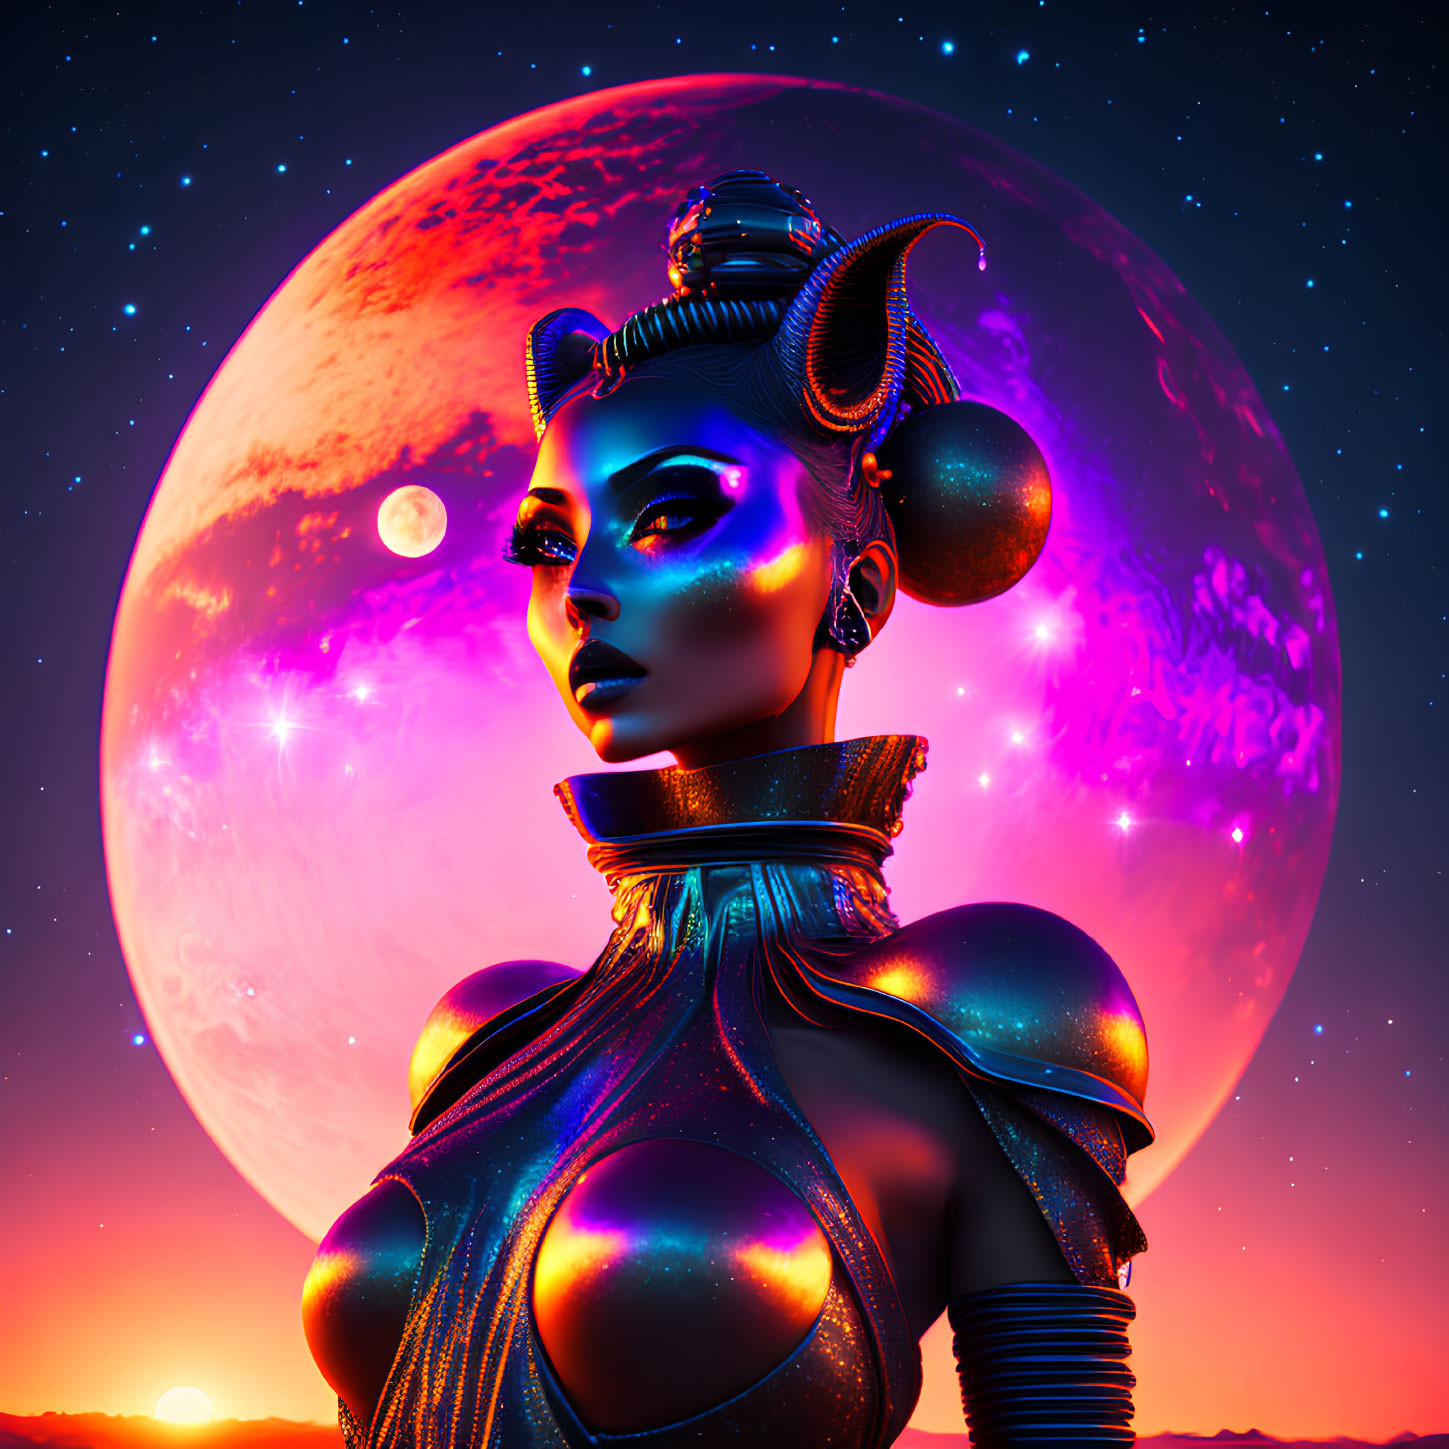 Metallic-skinned female figure with ornate headgear under purple moonlit sky